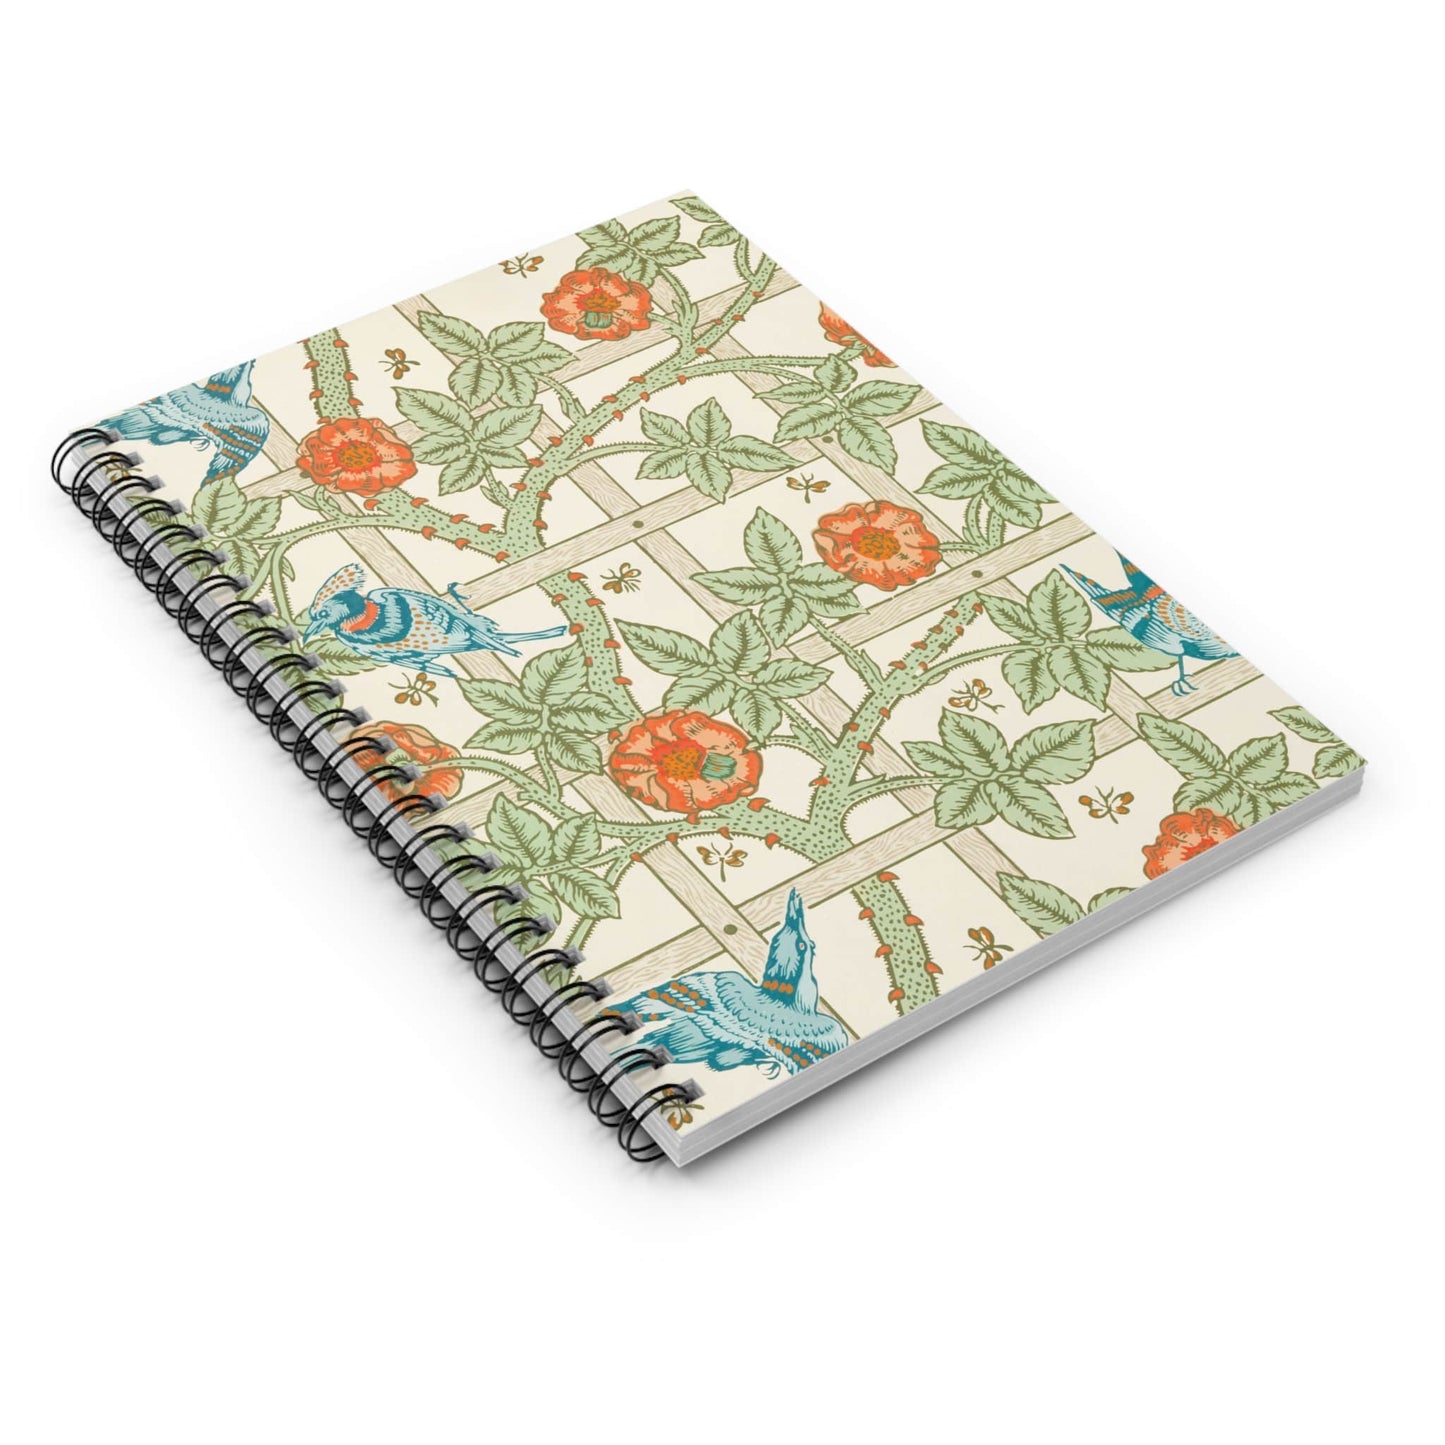 Spring Pattern Spiral Notebook Laying Flat on White Surface